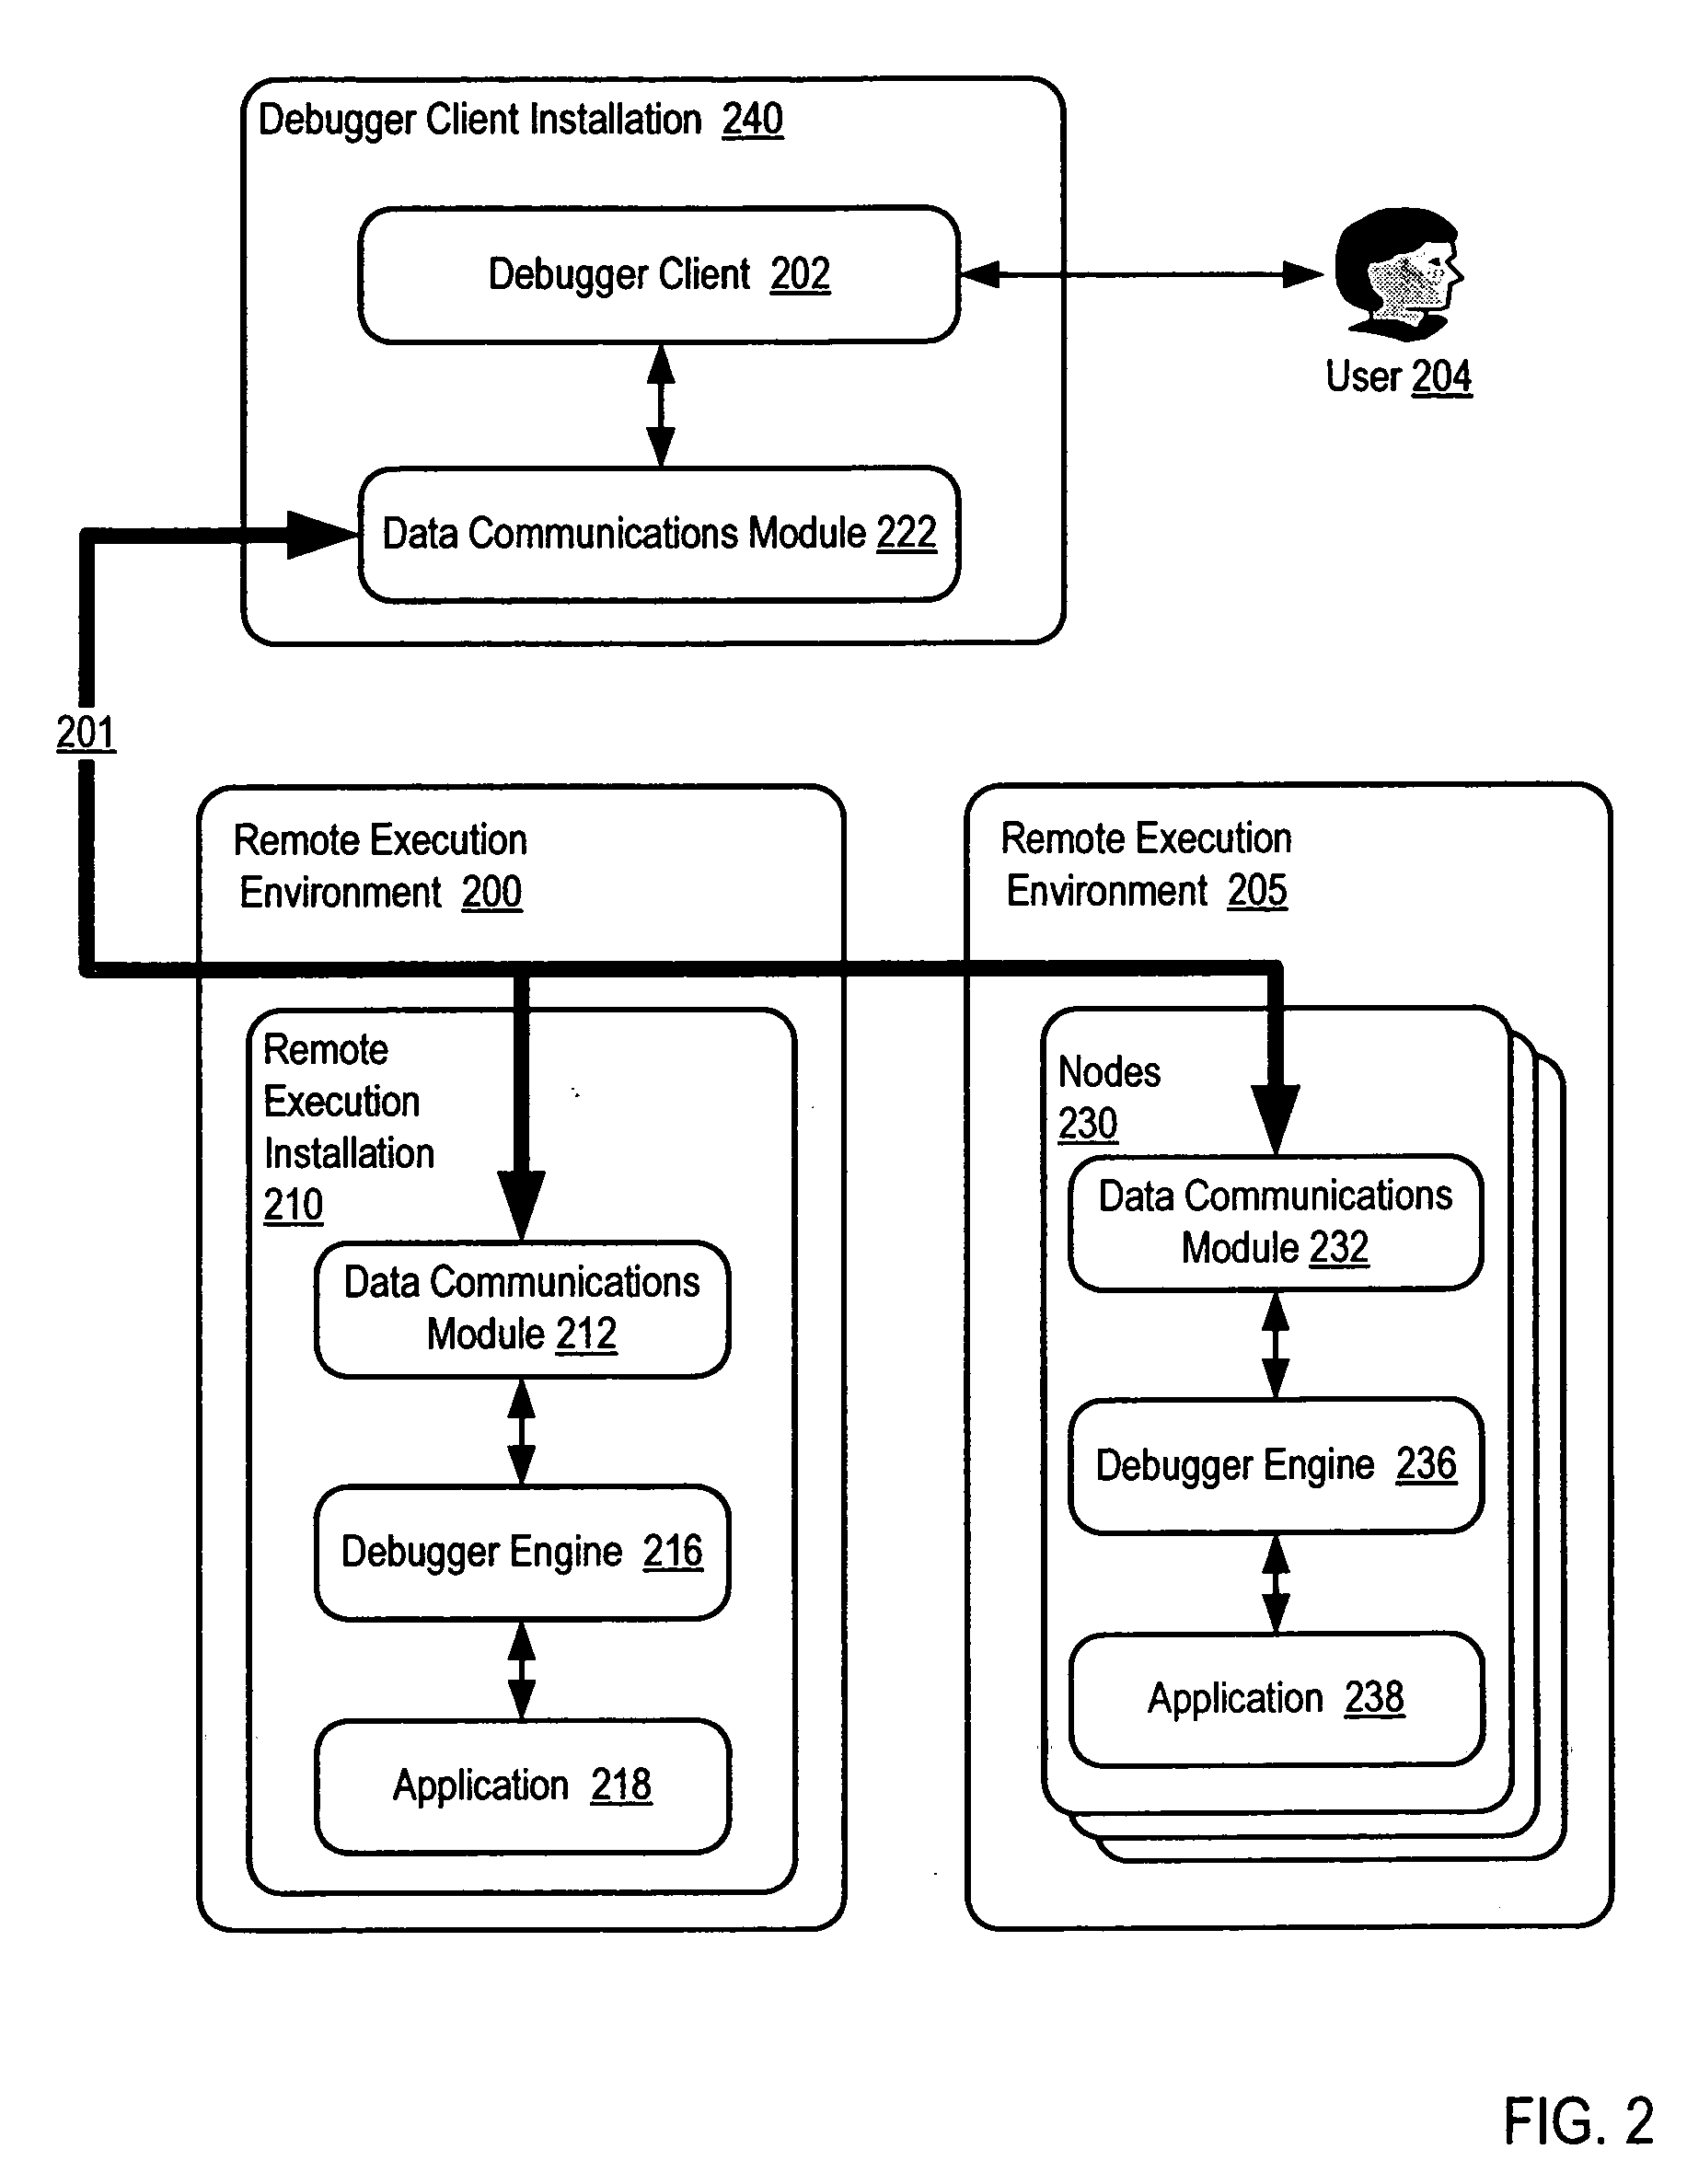 Debugging a computer program in a distributed debugger